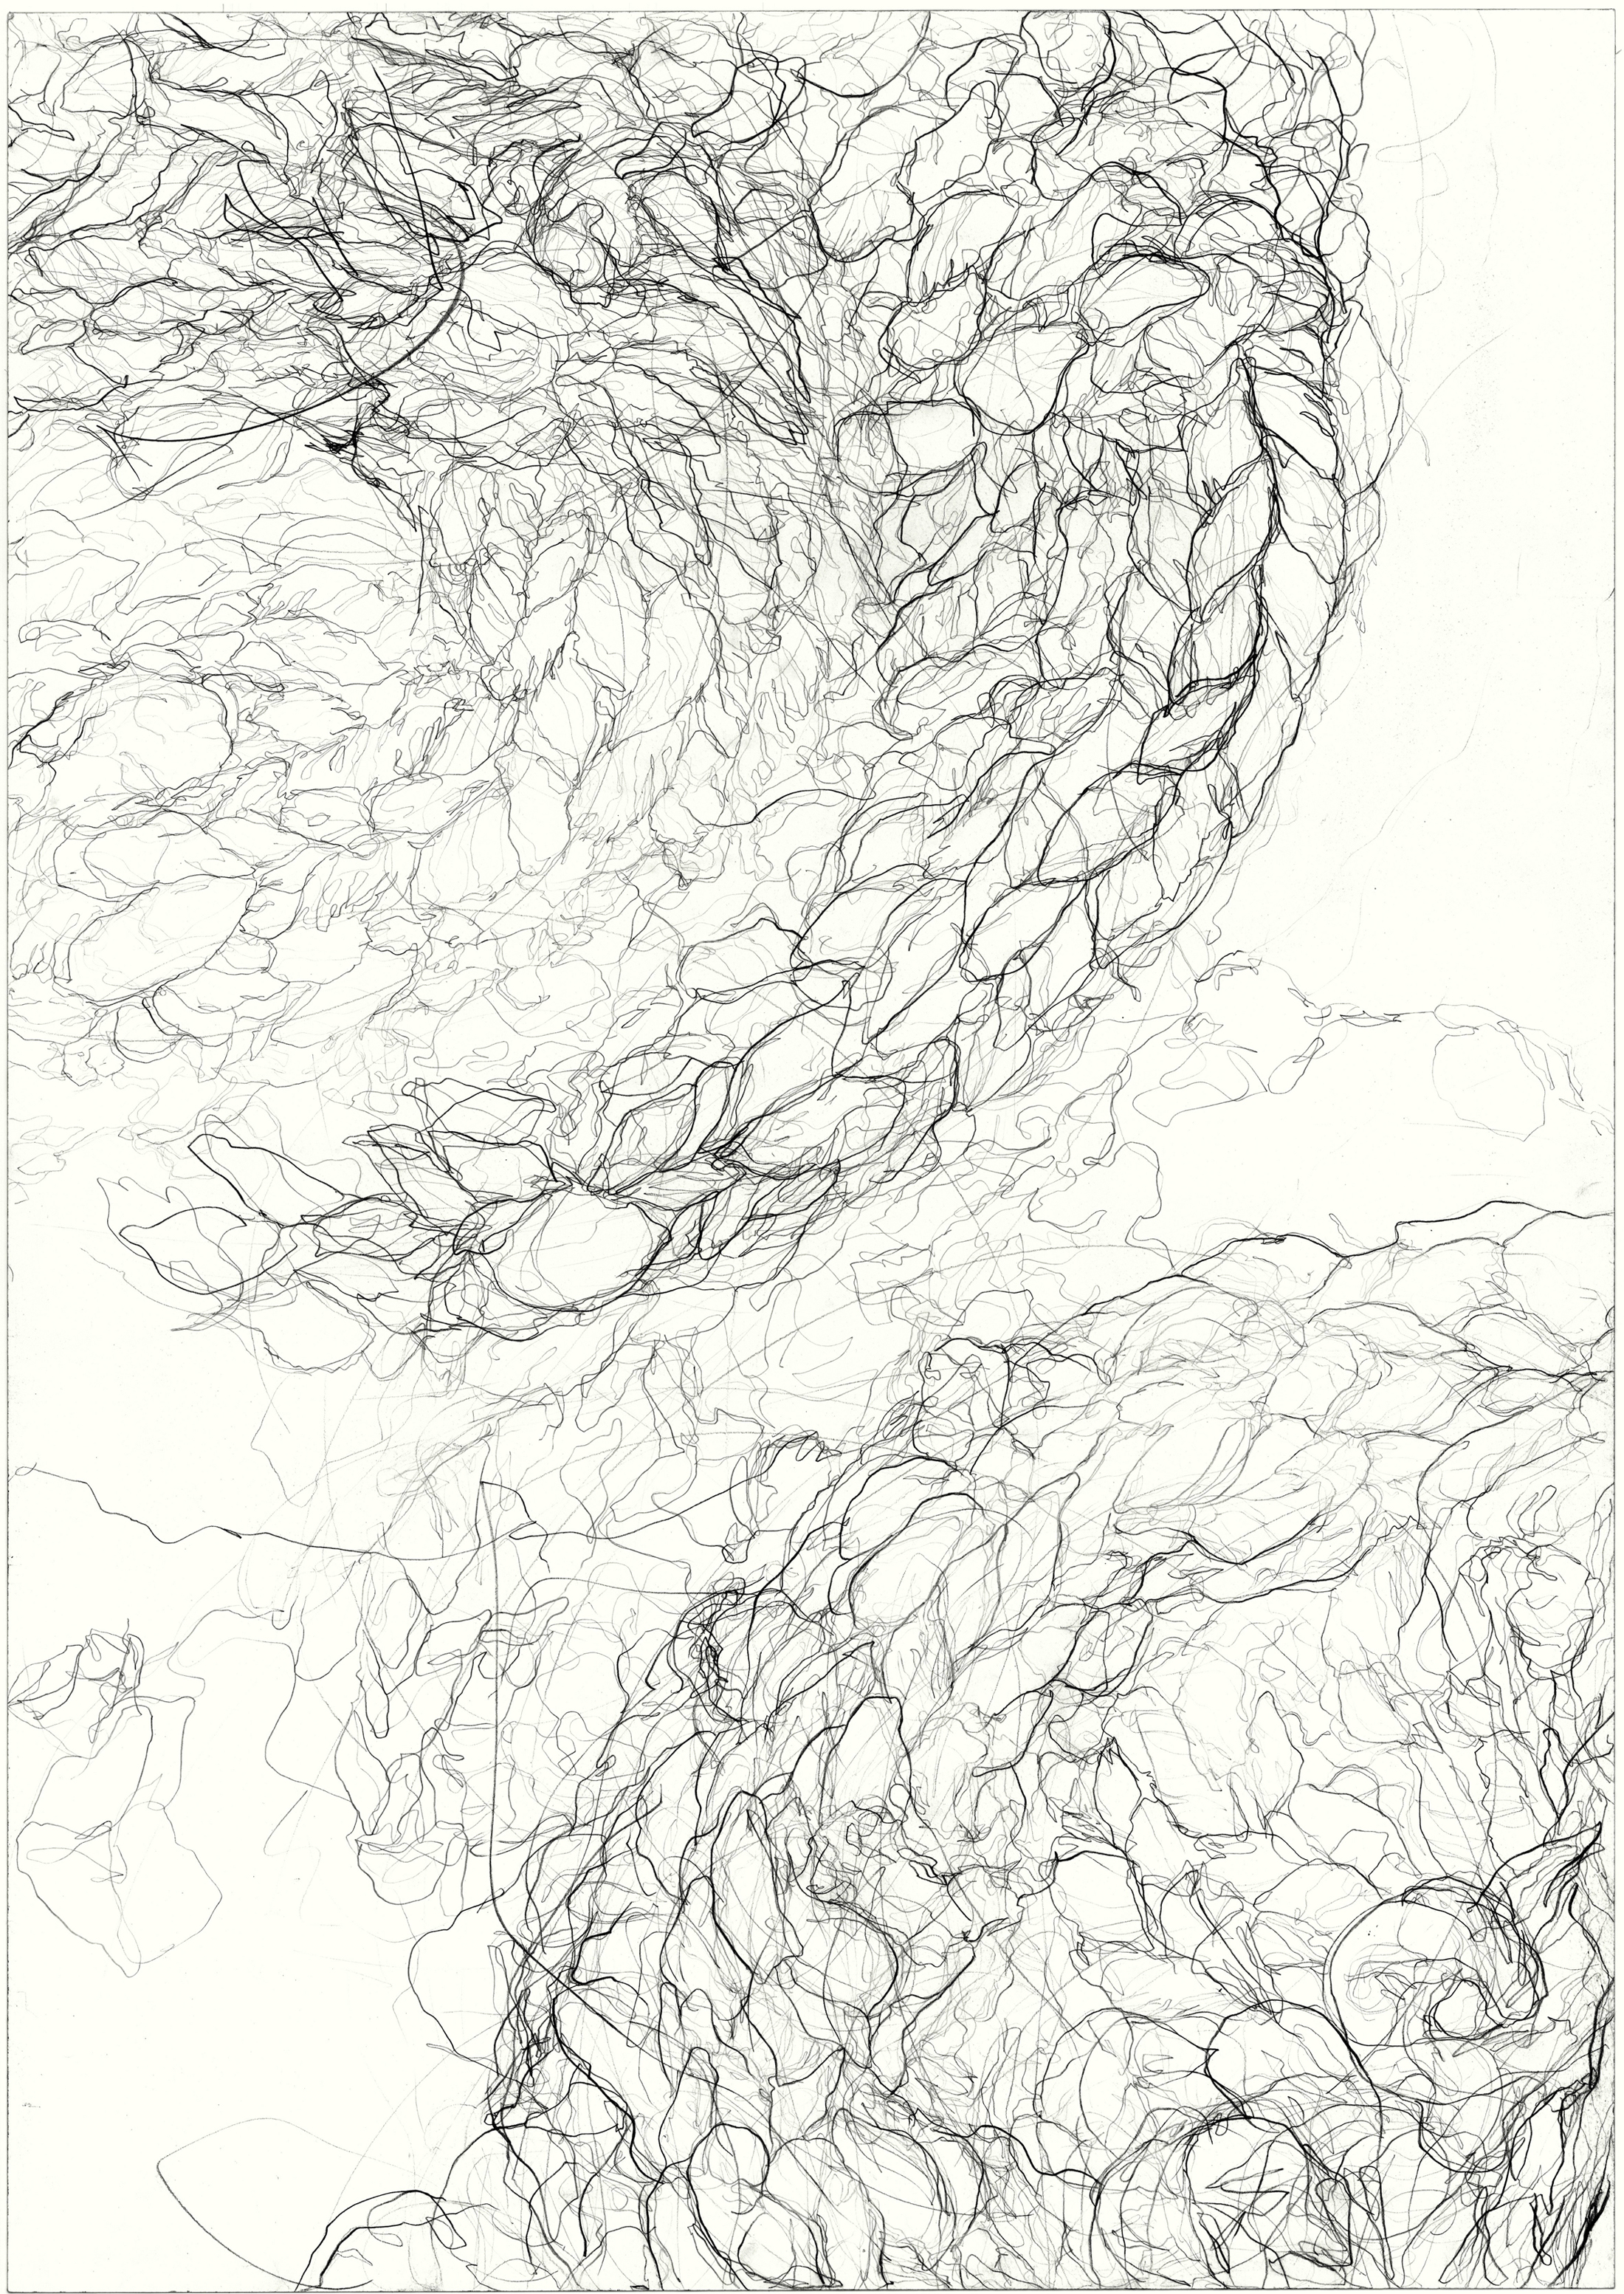   Dyskinesia  2011, pencil on paper, 84.1 cm x 59.5 cm. 